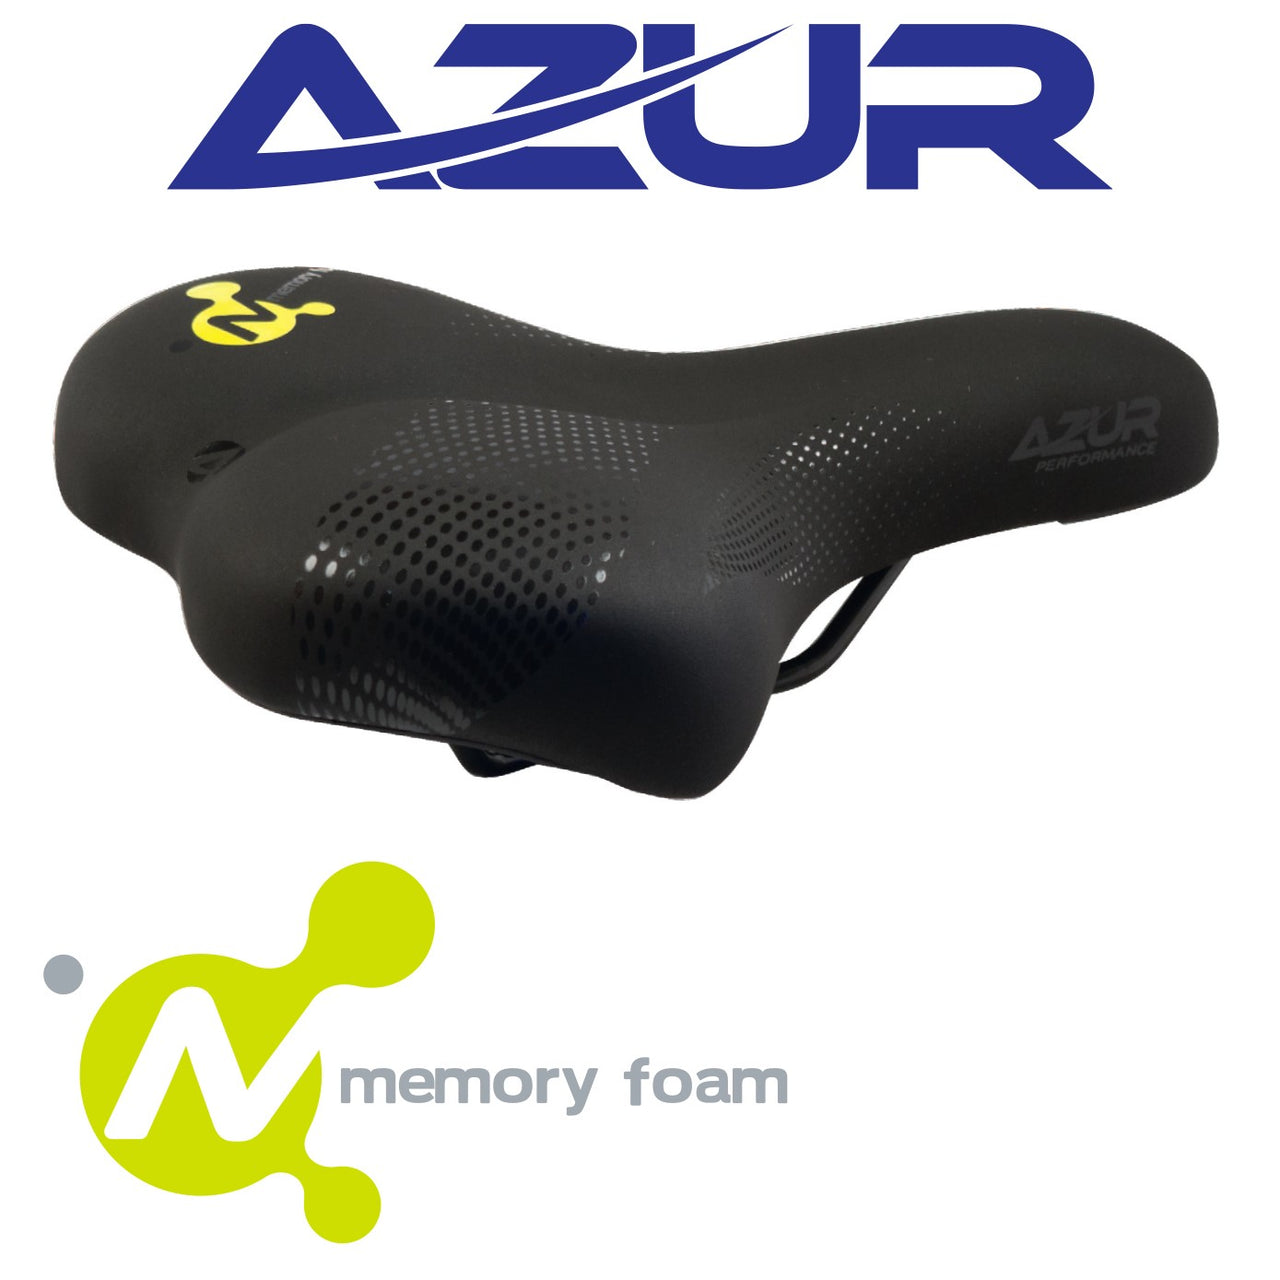 Azur Zeta Bicycle Saddle Memory Foam